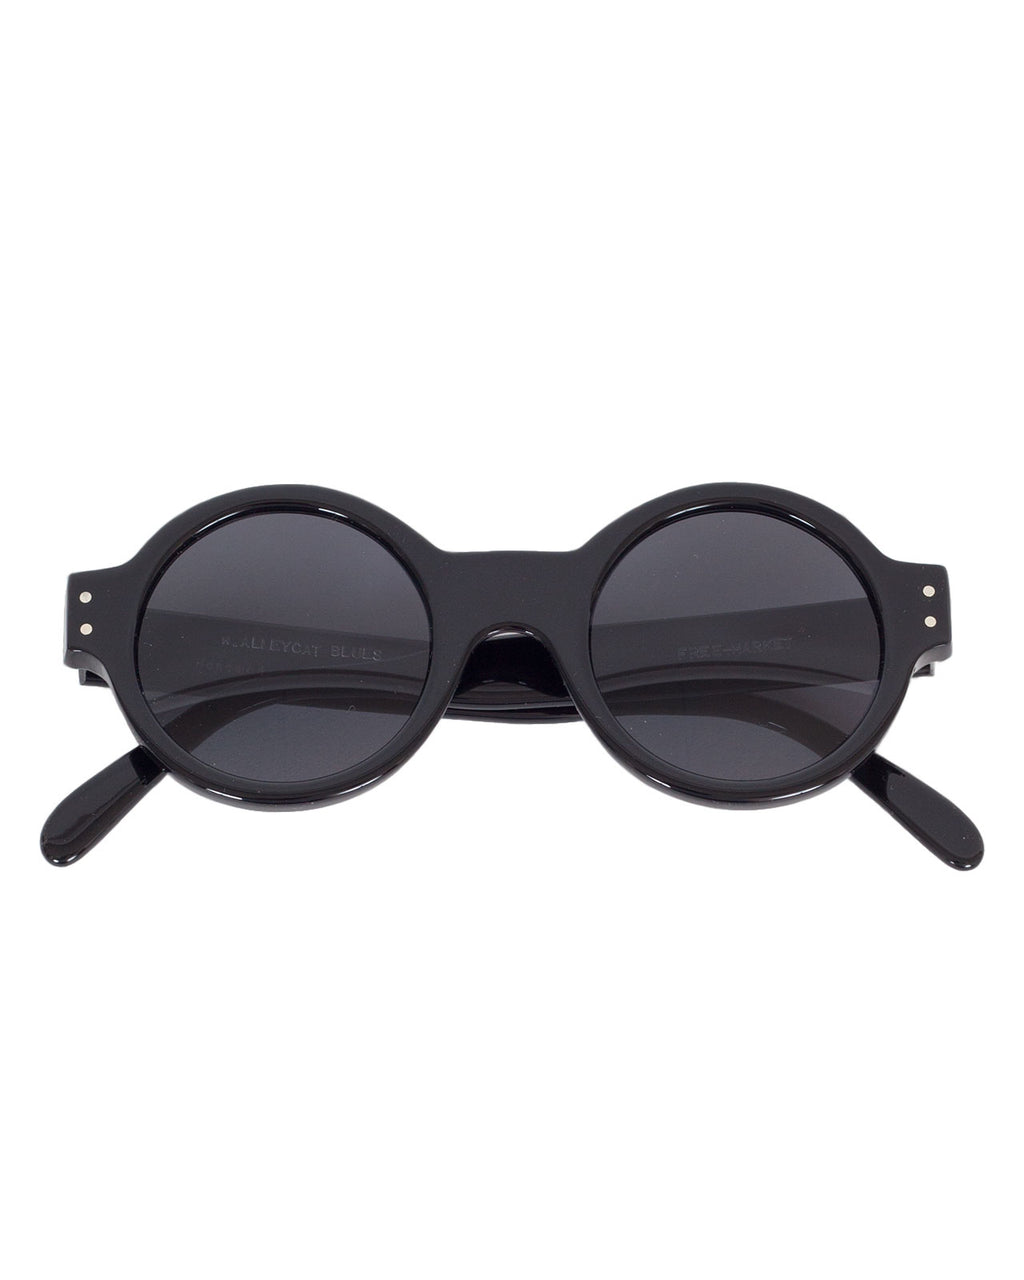 Free-Market Sunglasses, Alleycat Blues, Black